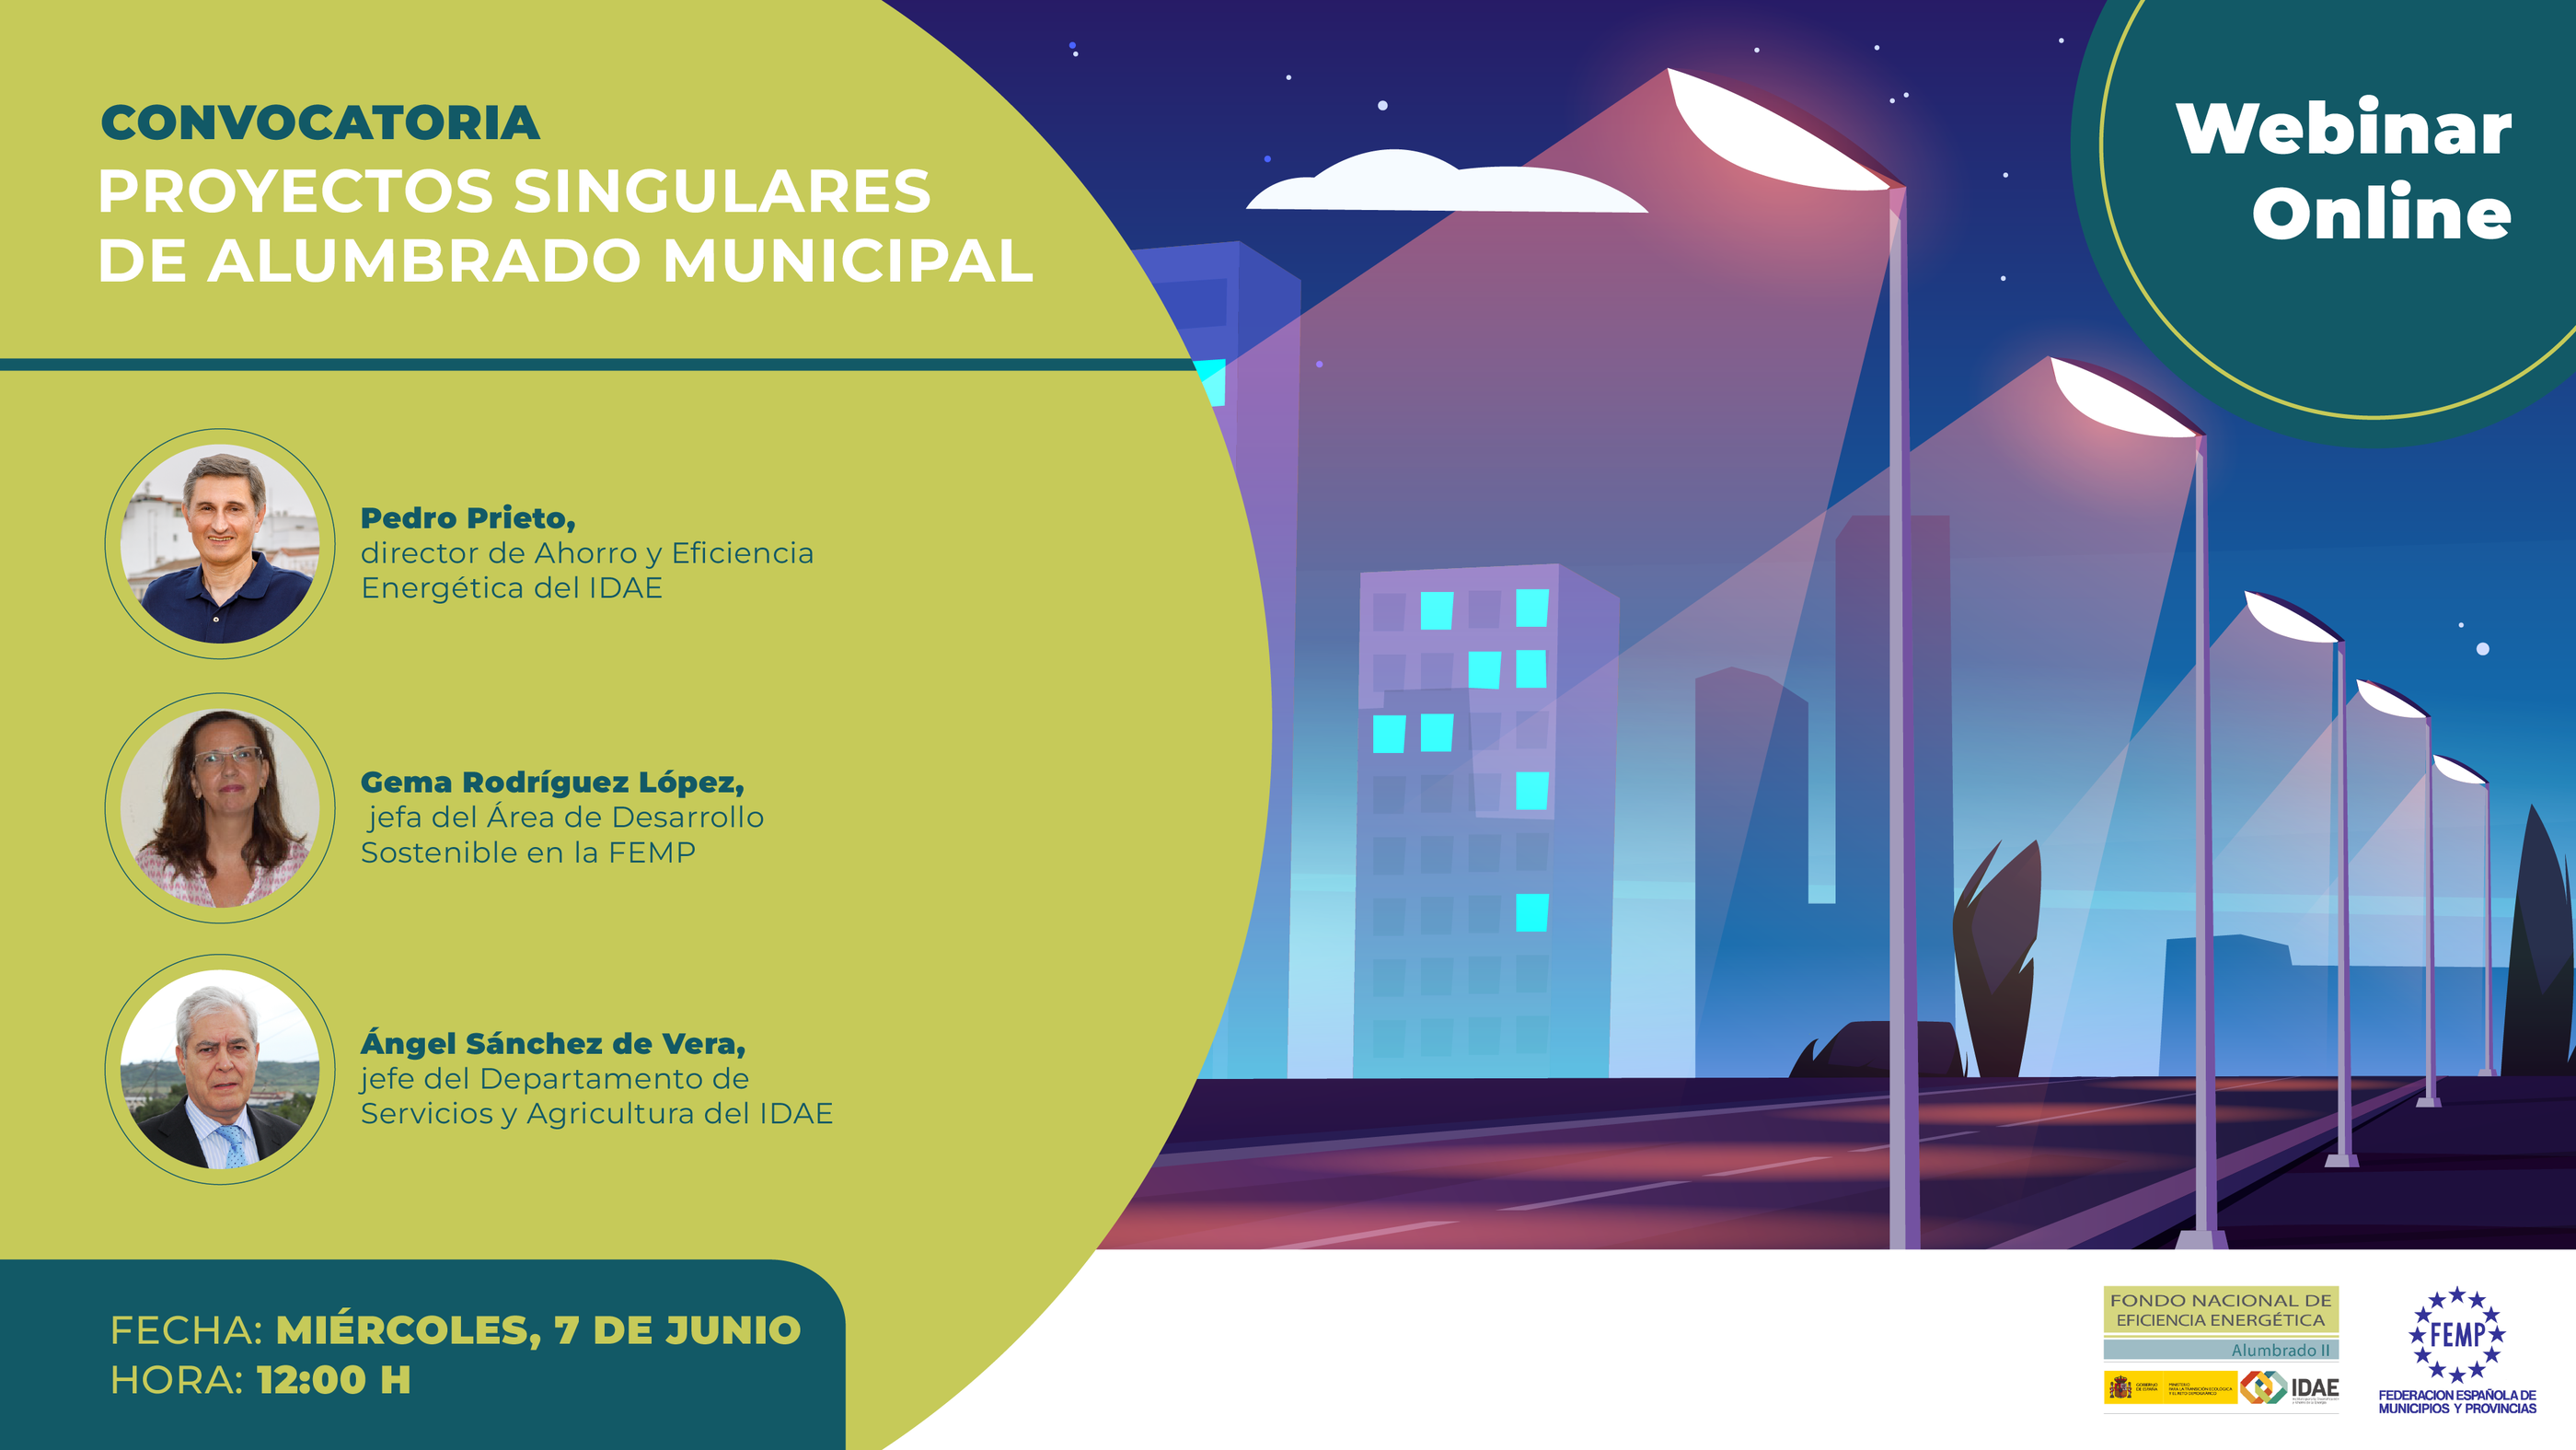 Webinar Online: Convocatoria Proyectos Singulares de Alumbrado Municipal